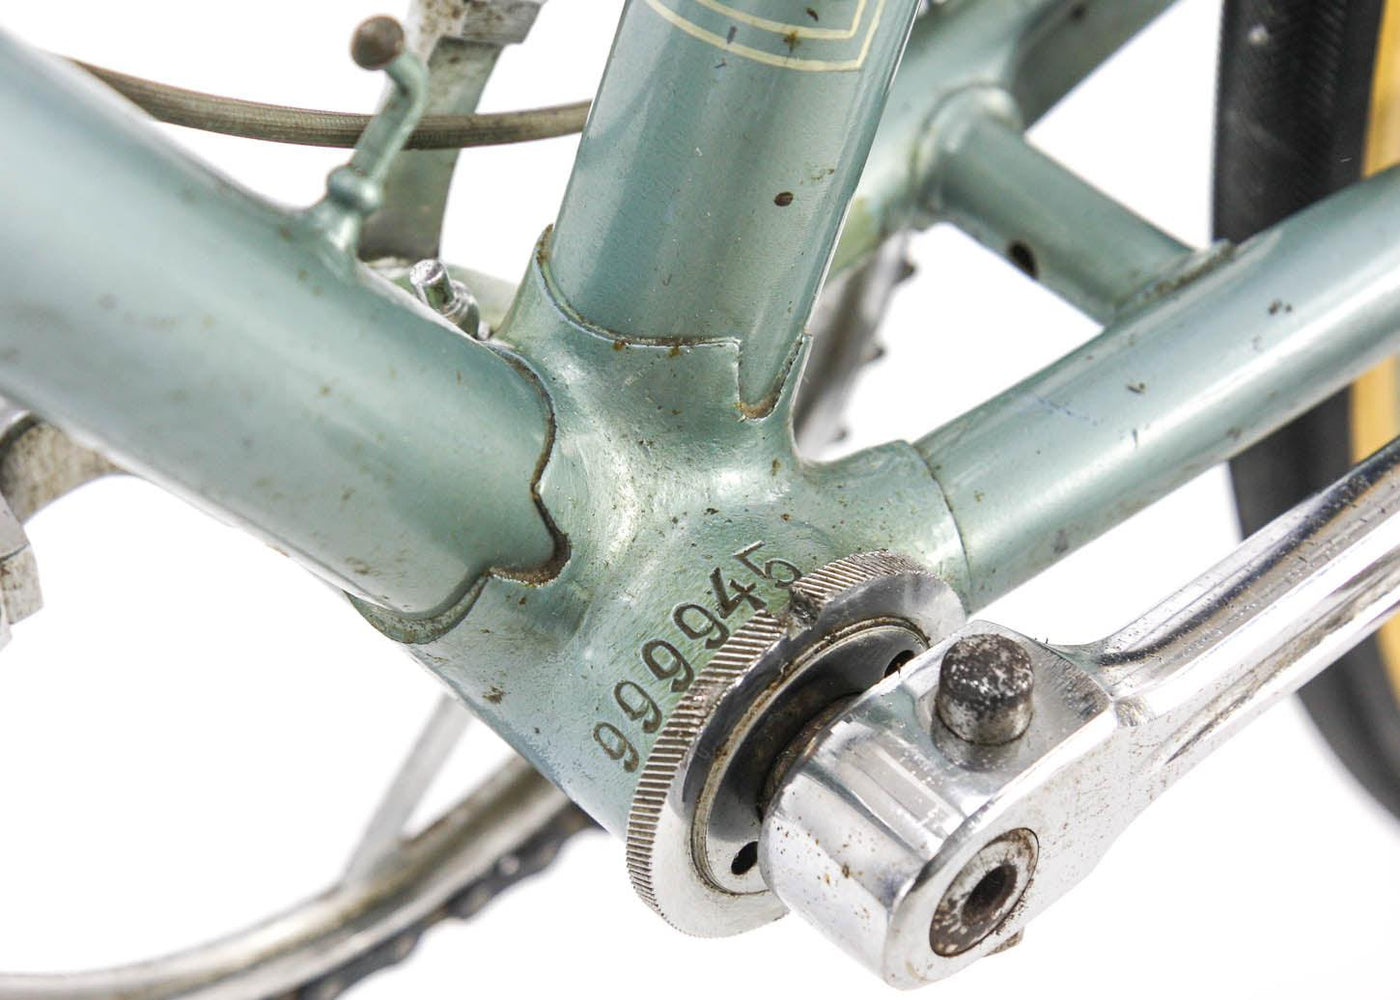 Expresswerke Berufsfahrer Classic Road Bike 1950s - Steel Vintage Bikes